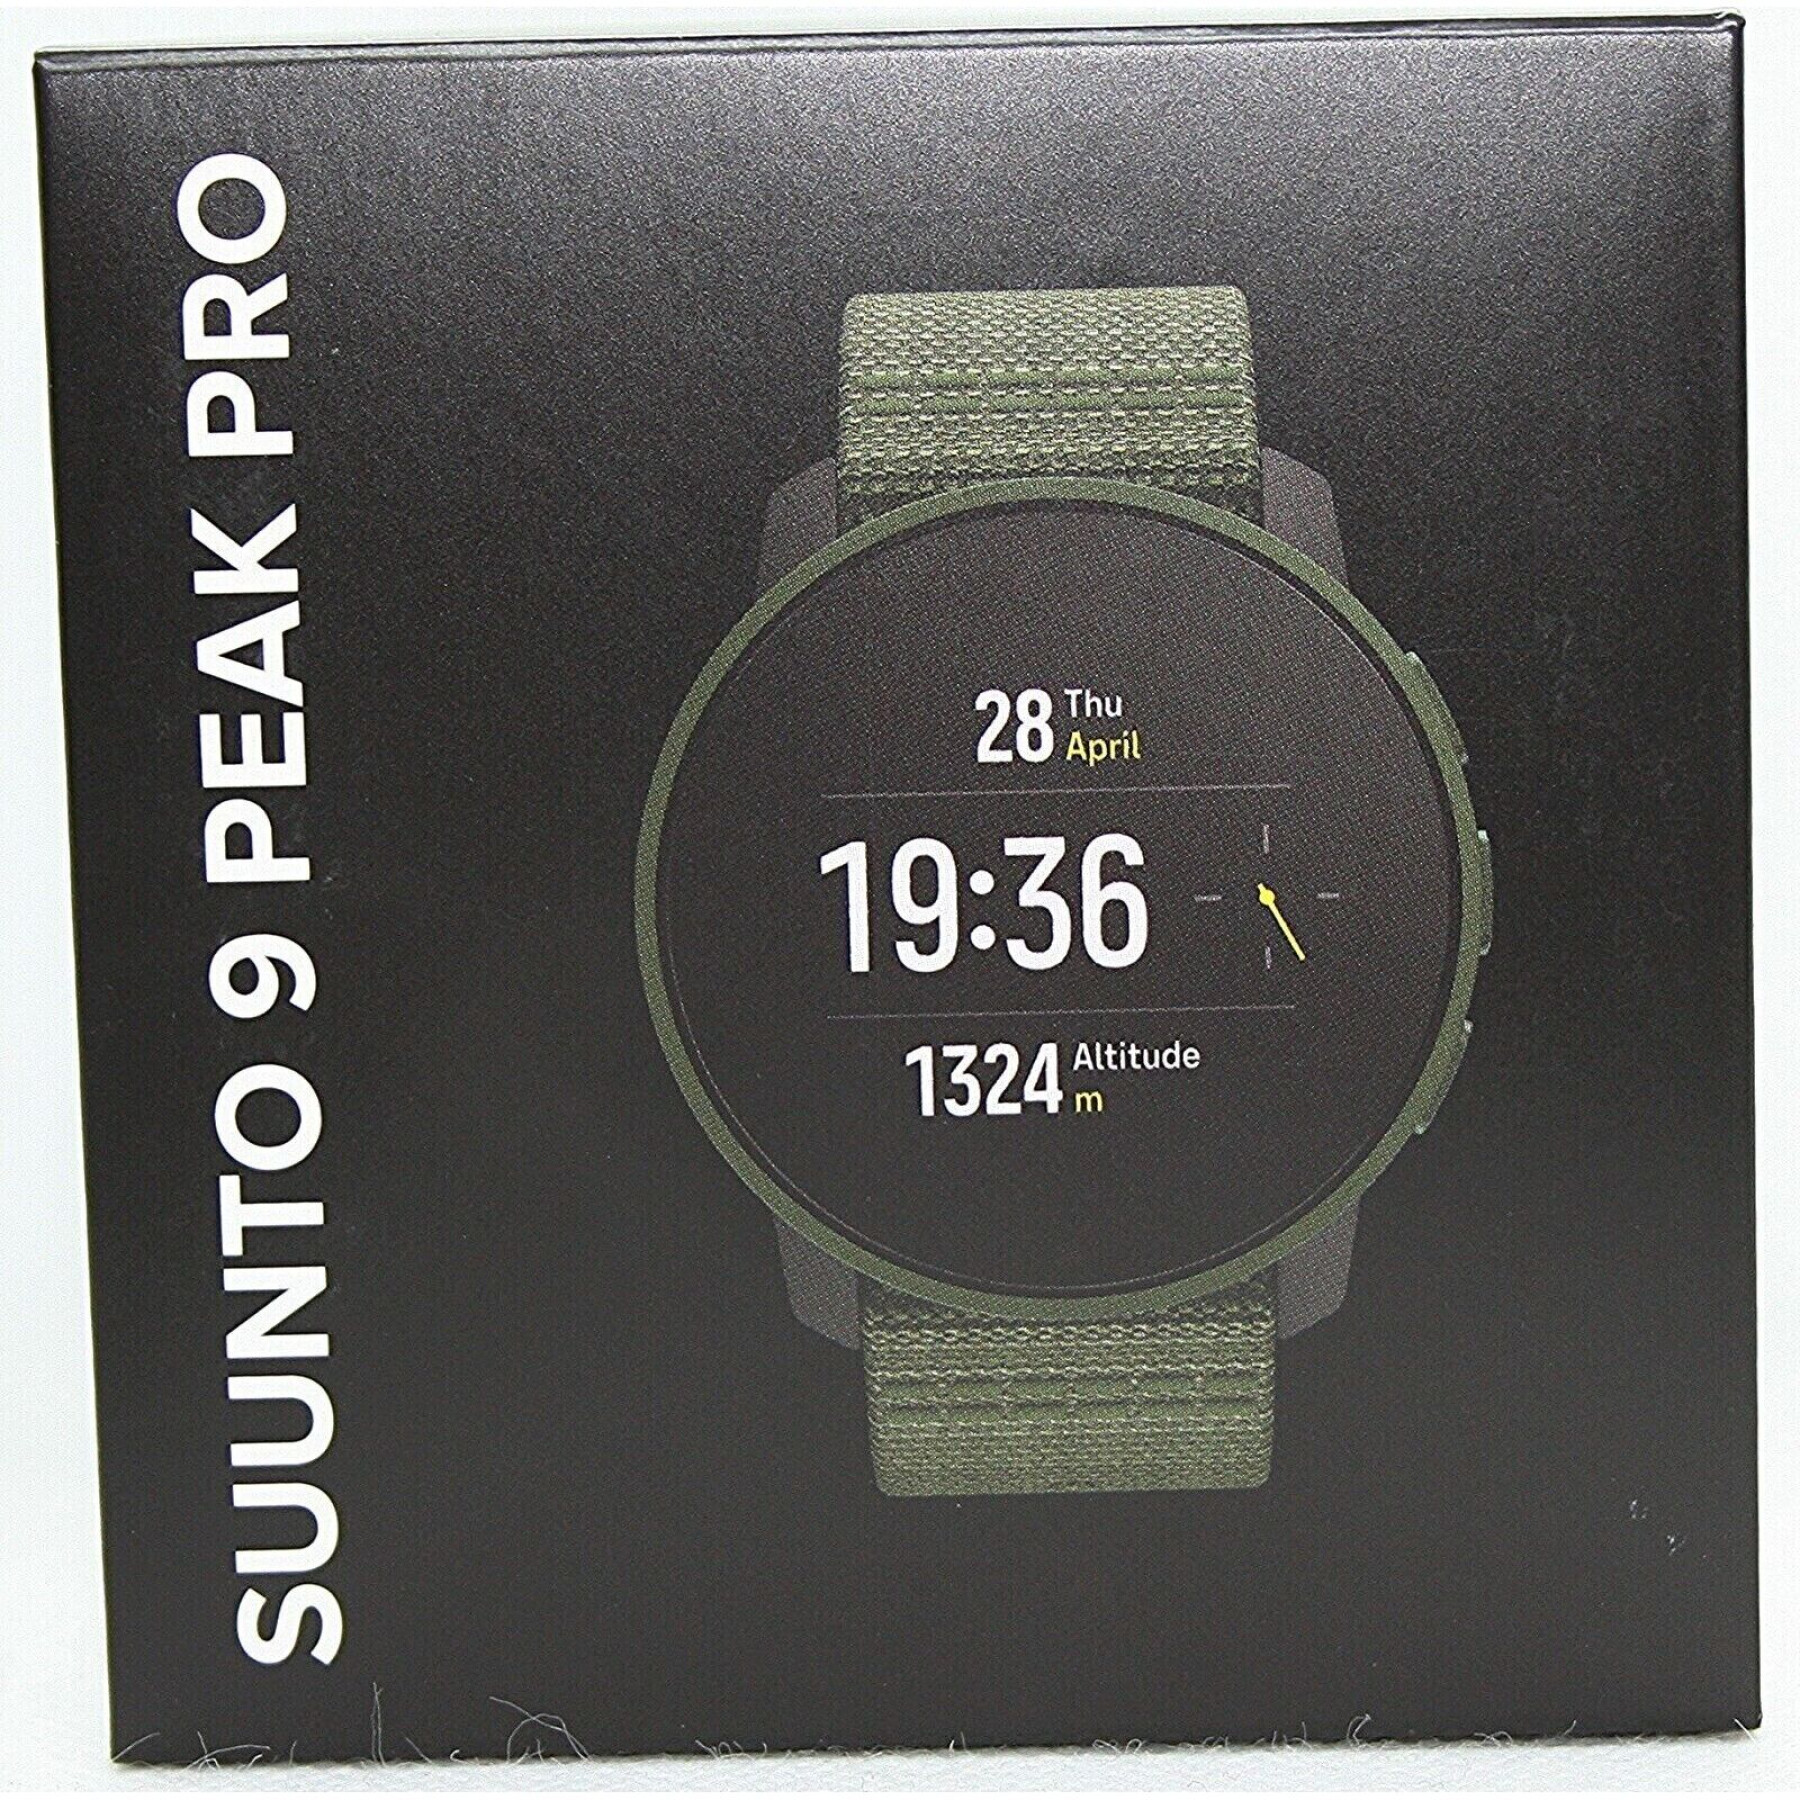 Watch gps Suunto 9 Peak Pro - Watches - Accessories - Equipment